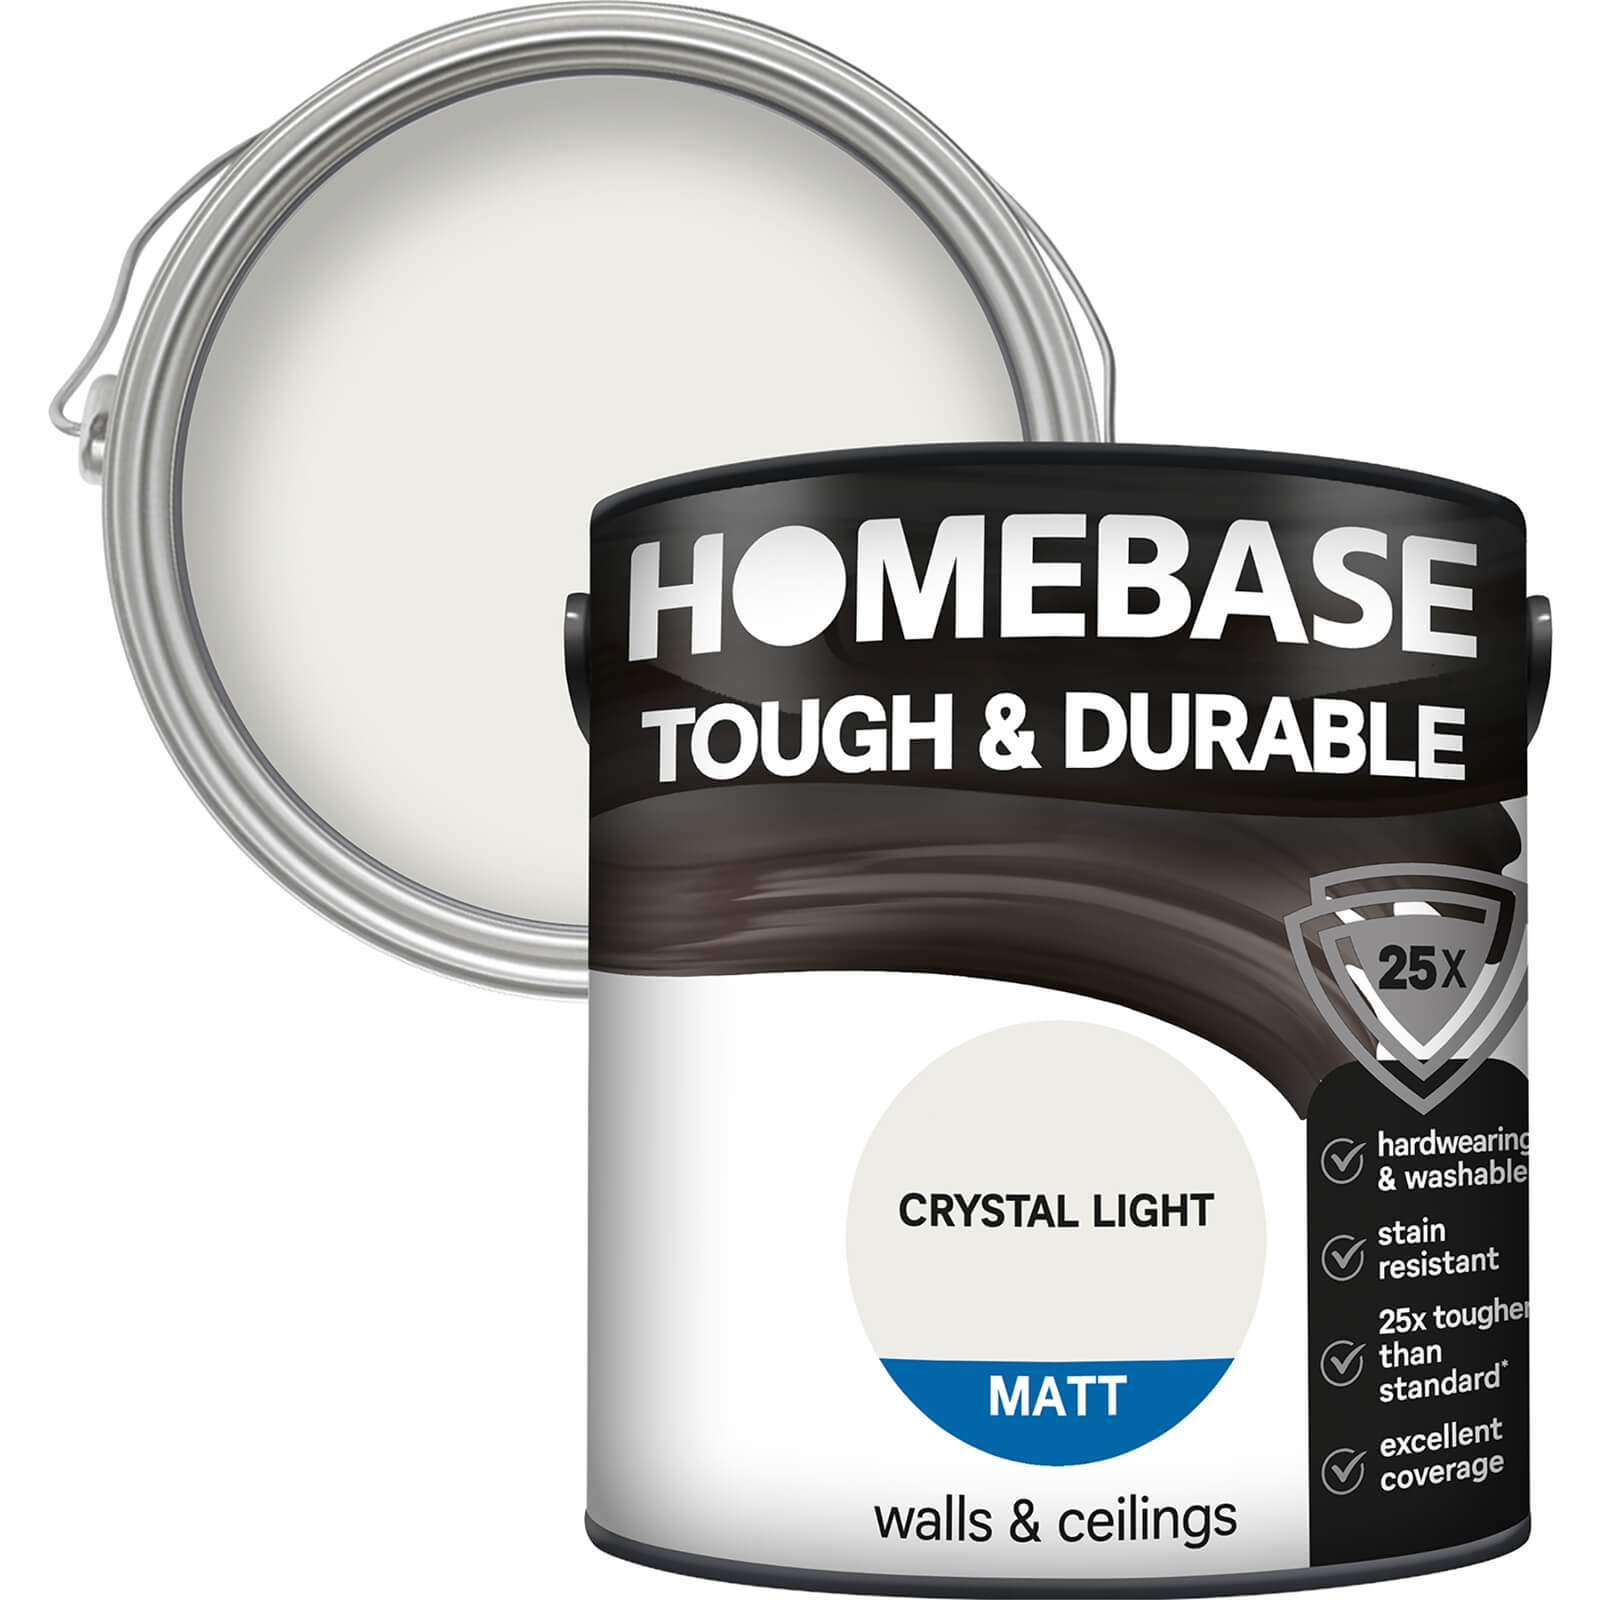 Homebase Tough & Durable Matt Paint Crystal Light - 2.5L